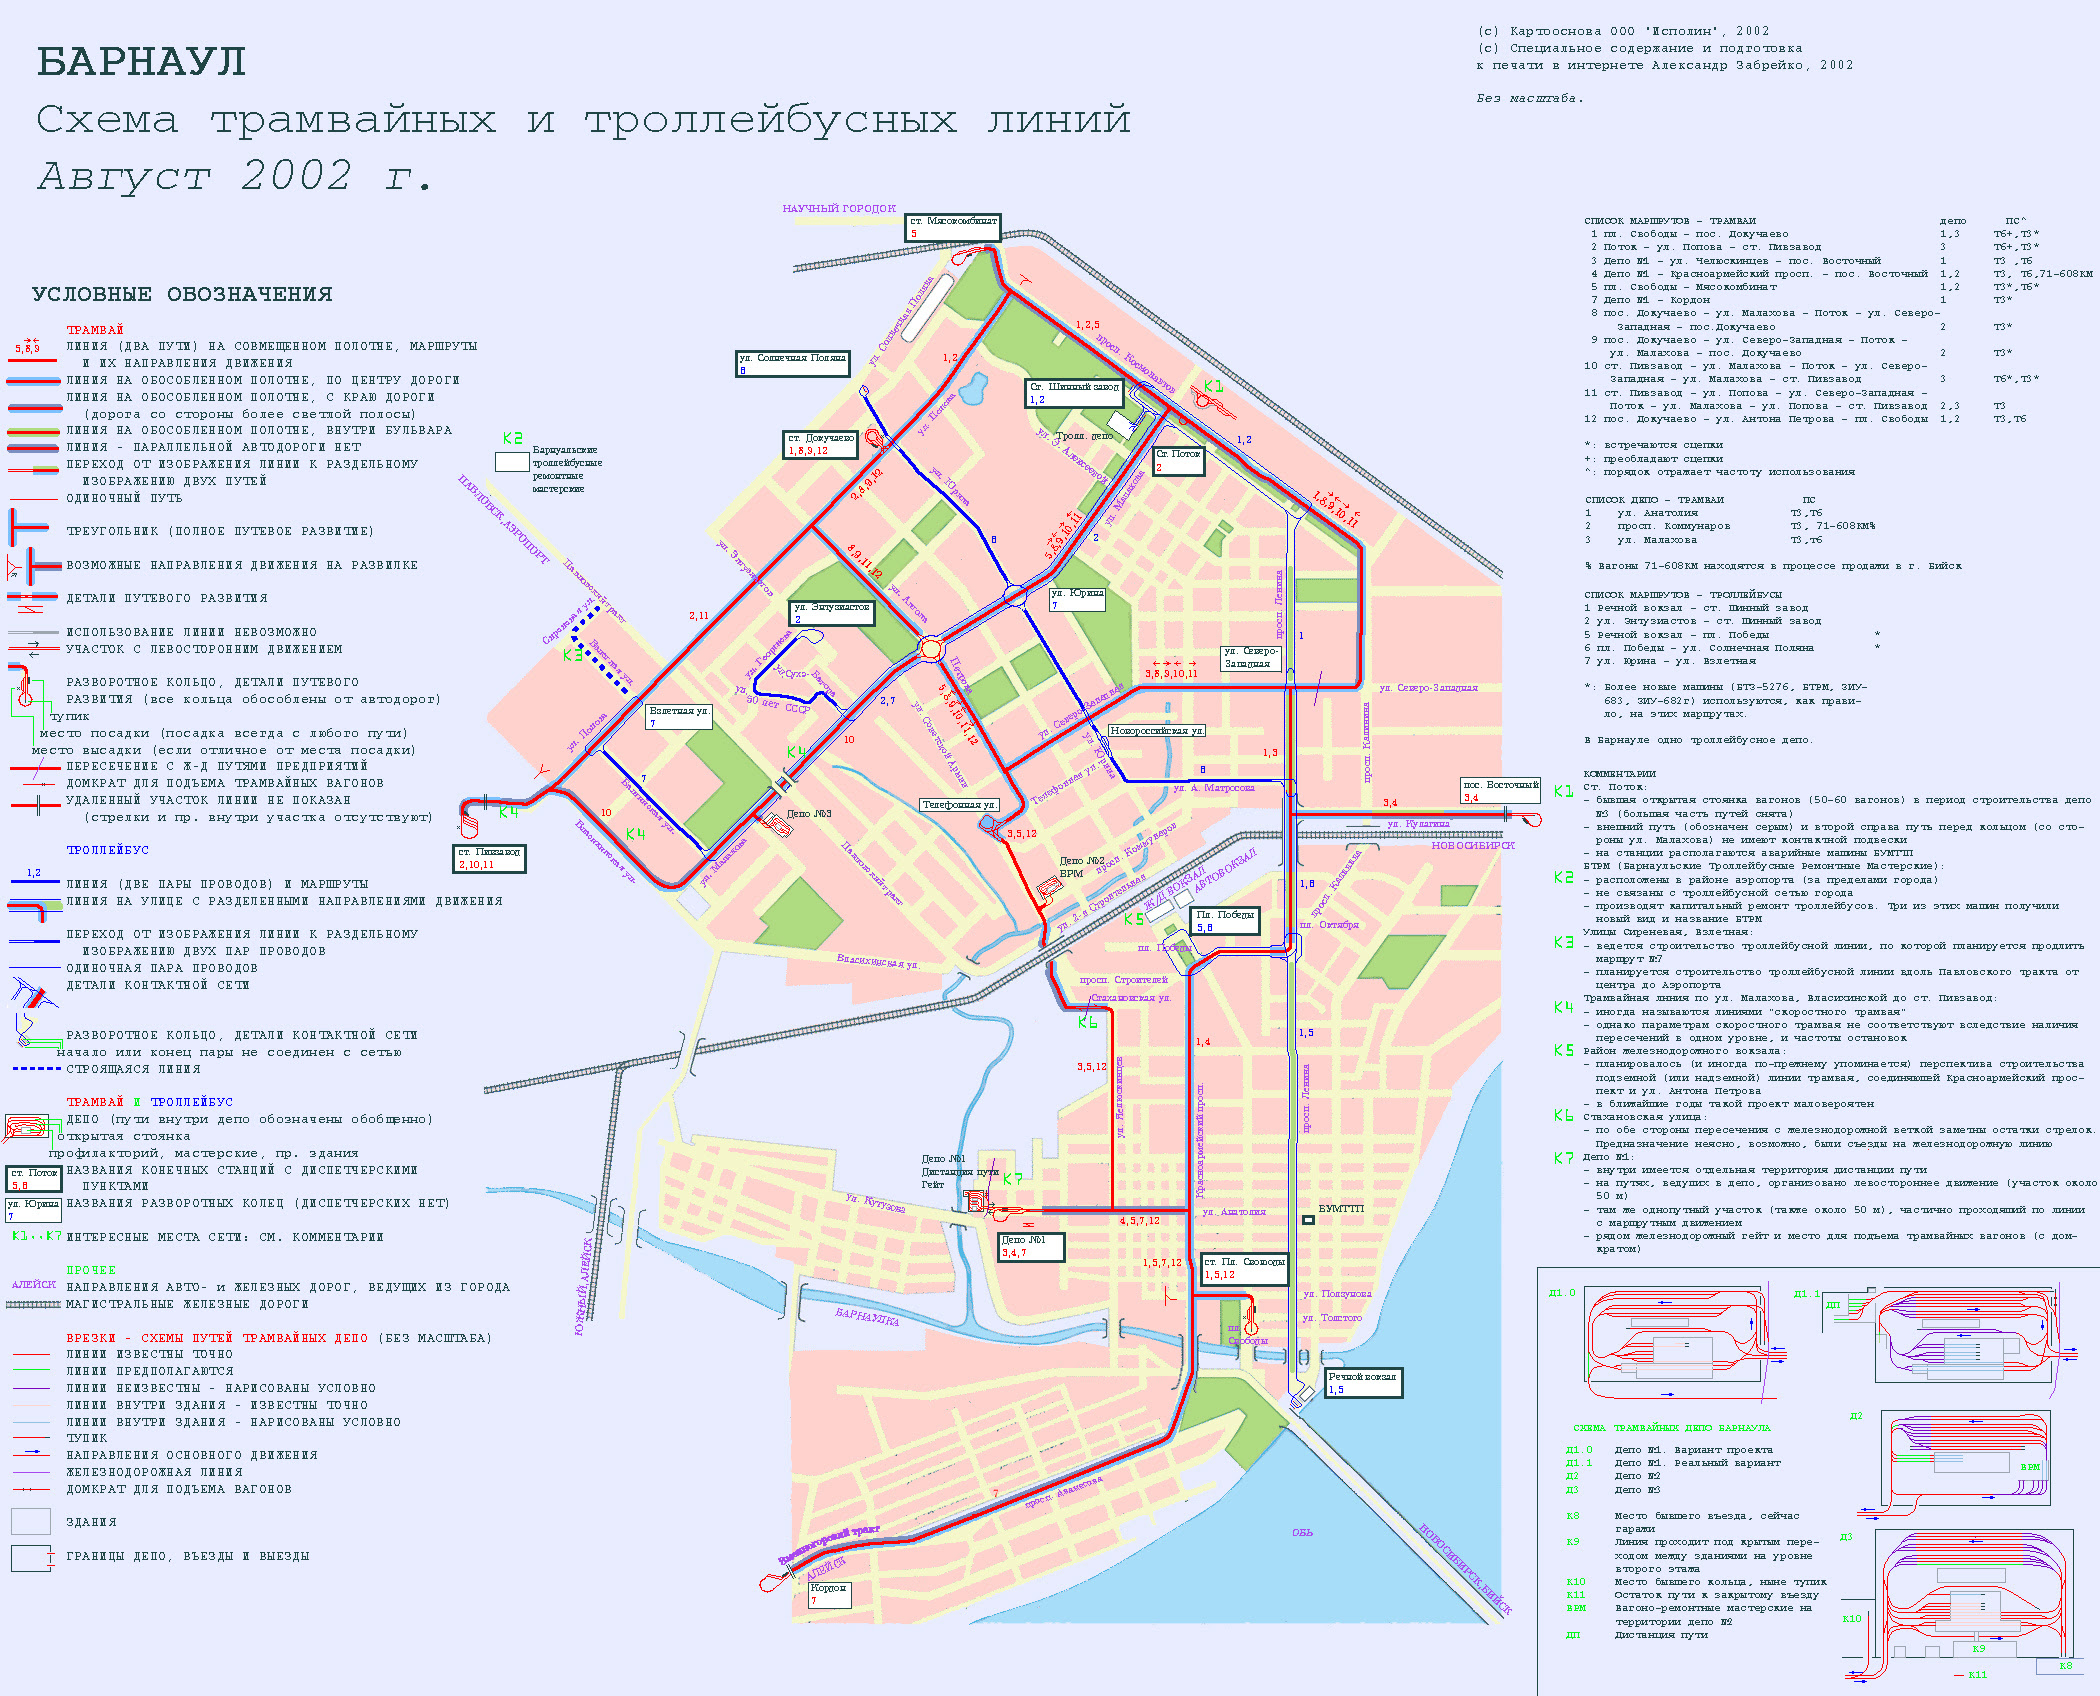 Движение трамваев барнаул. Схема движения трамваев в Барнауле. Схема трамвайных маршрутов Барнаула. Схема трамвайных маршрутов Барнаула 2021. Трамвайные пути Барнаул схема.